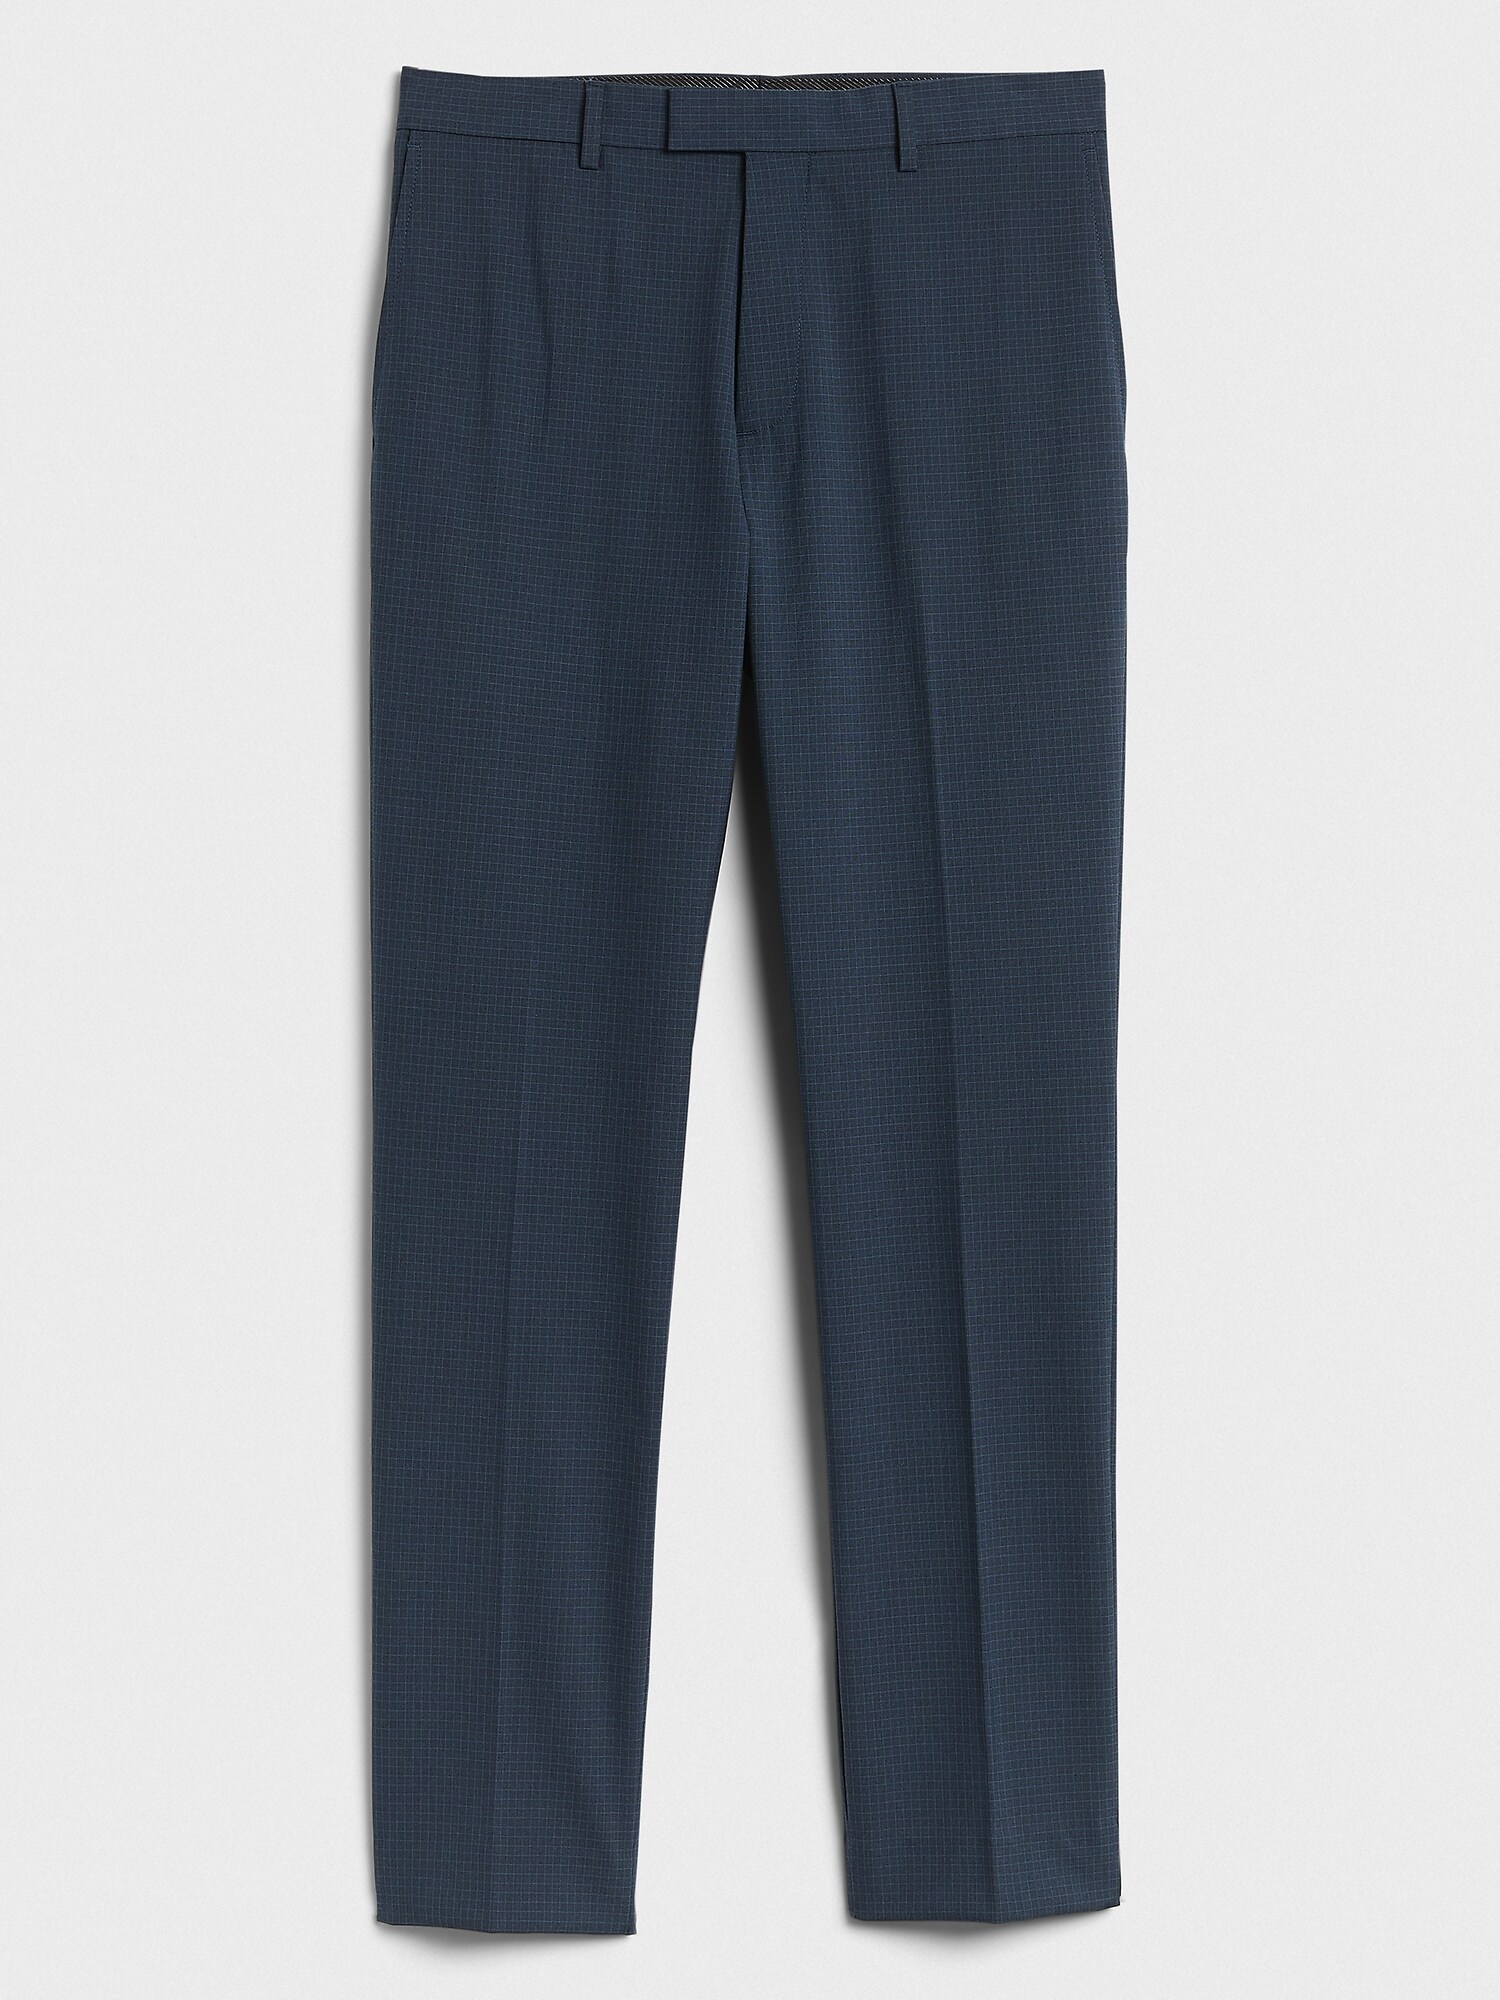 Mason Athletic-Fit Wrinkle Resistant Pant